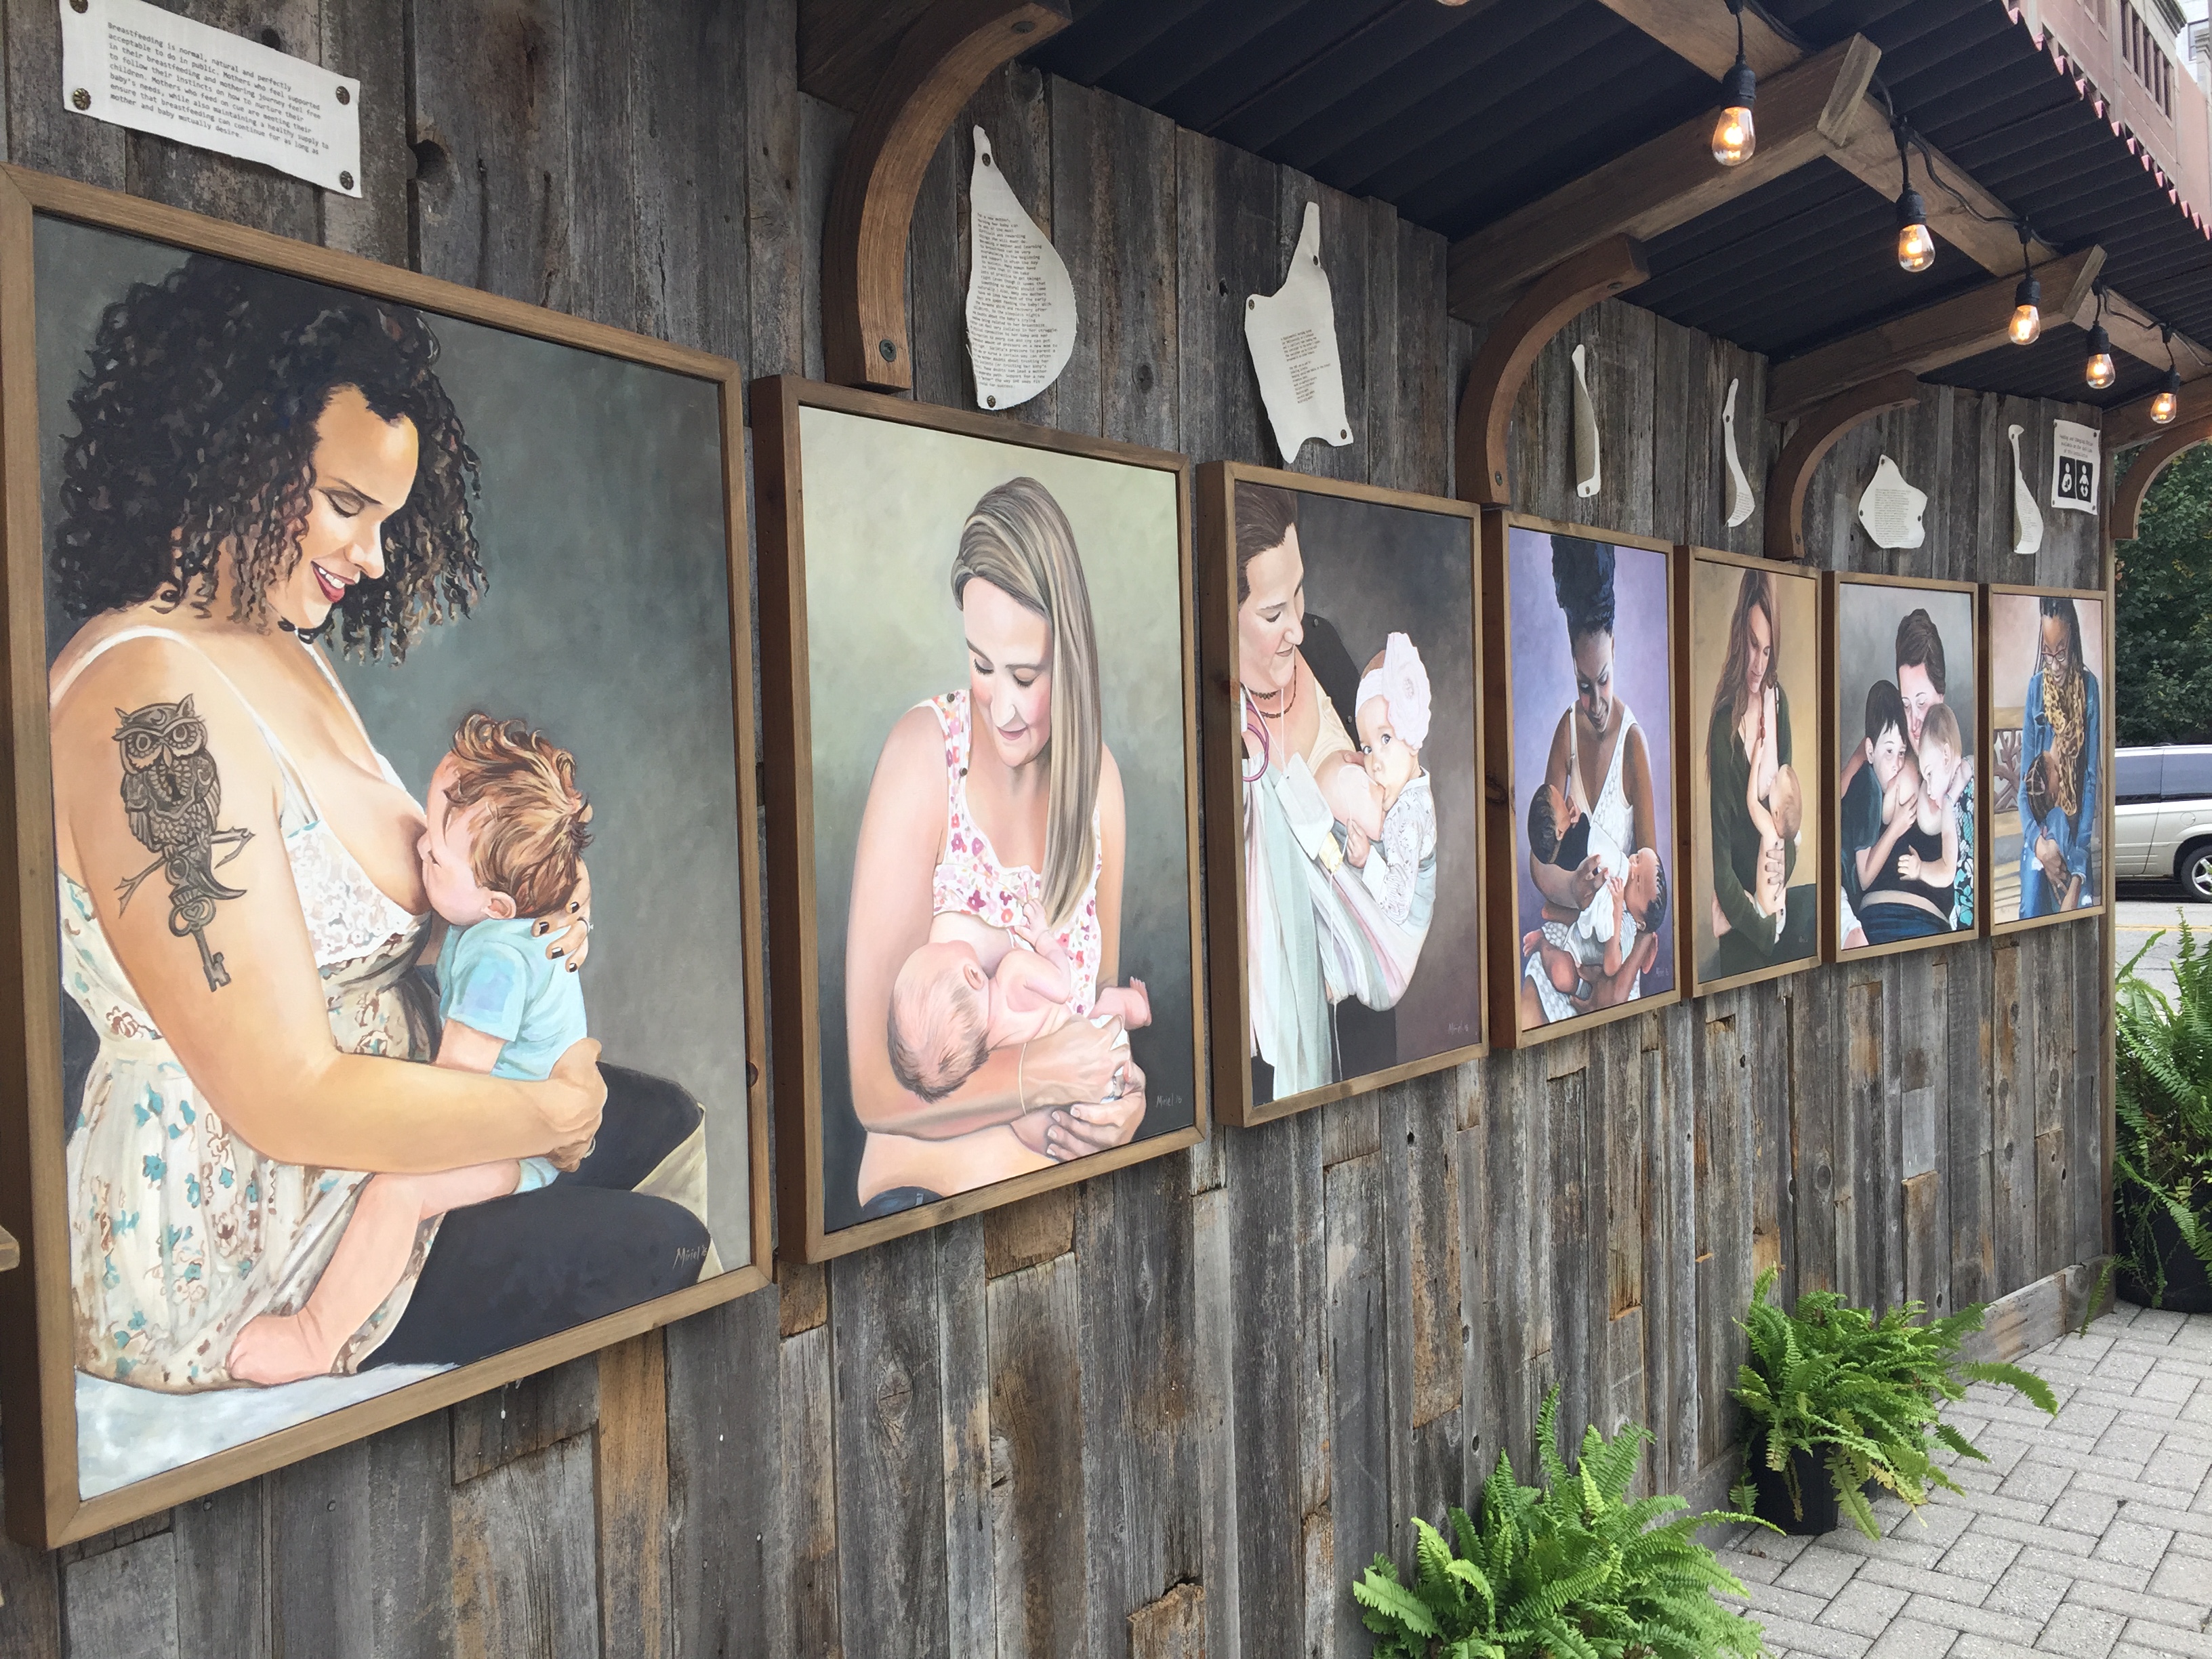 painted portraits of women breastfeeding babies